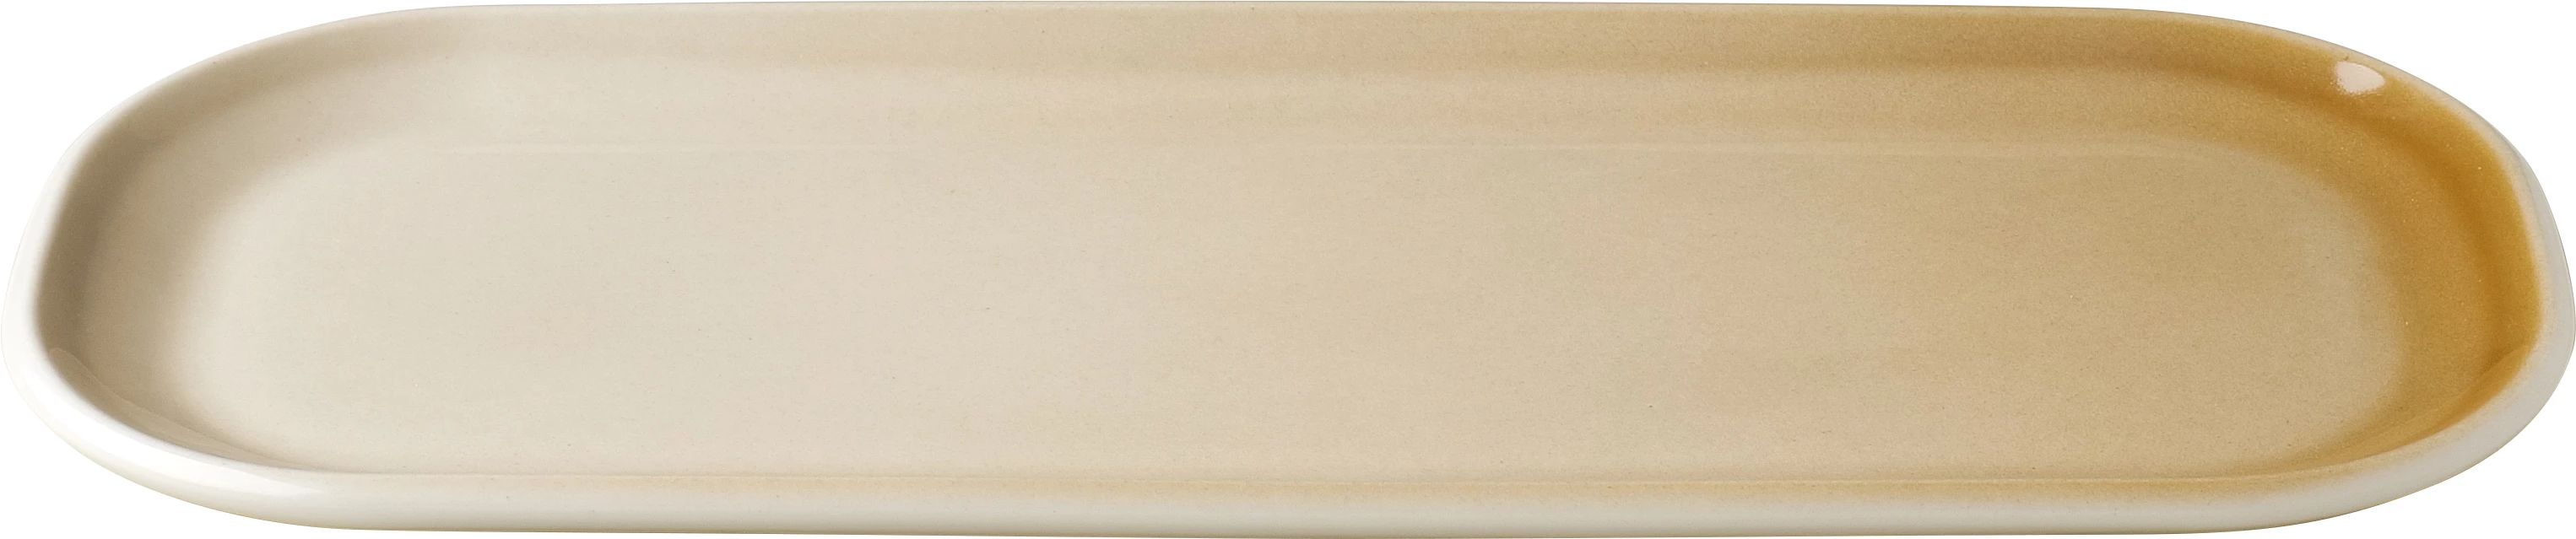 Figgjo Pax oval tallerken, sand, 30 x 13 cm